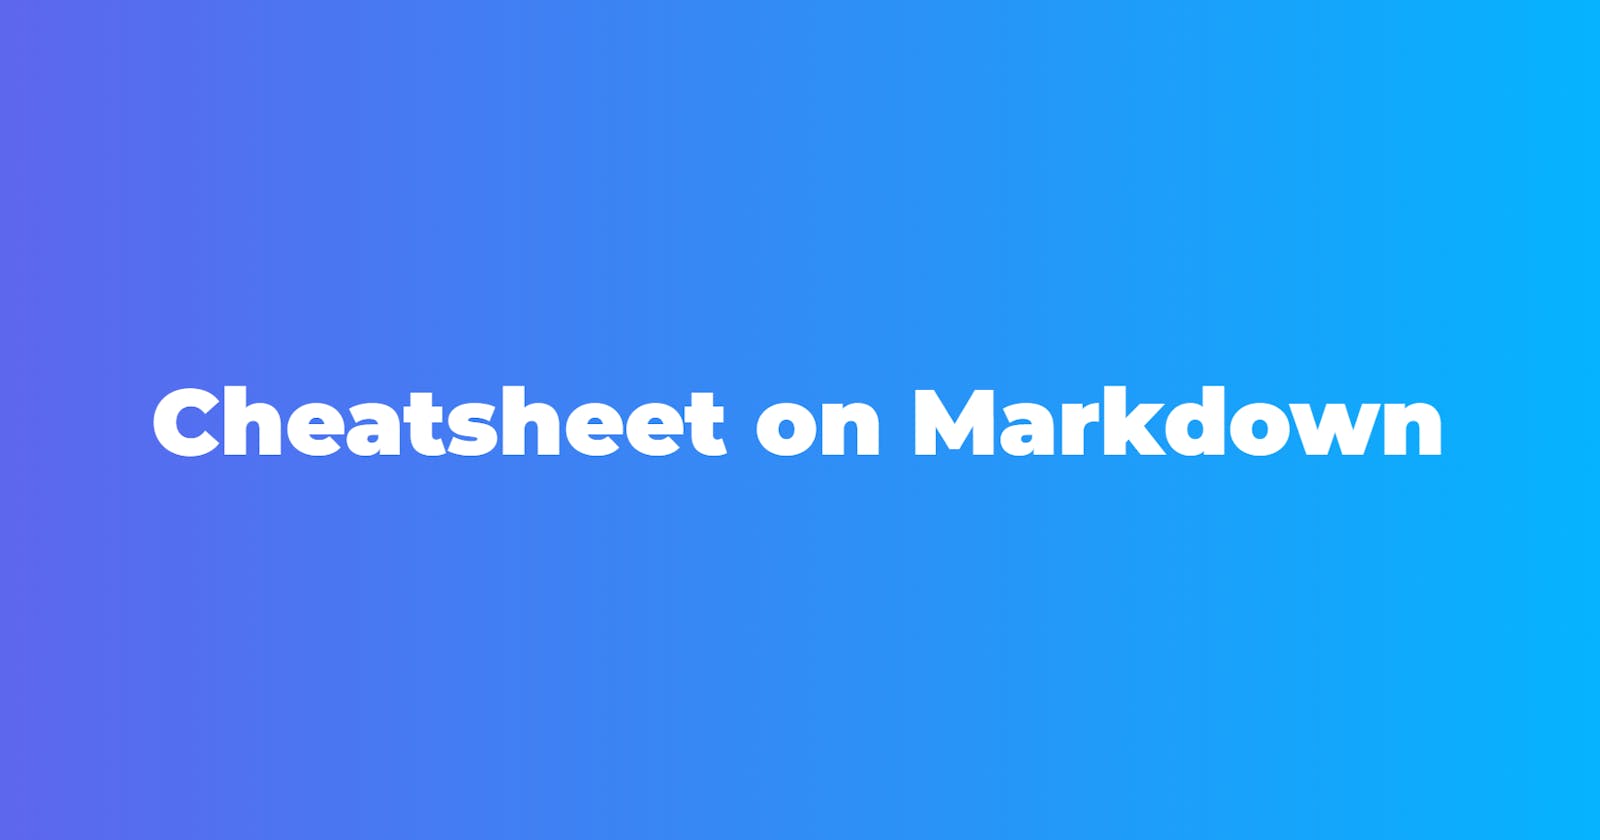 Cheat Sheet on Markdown